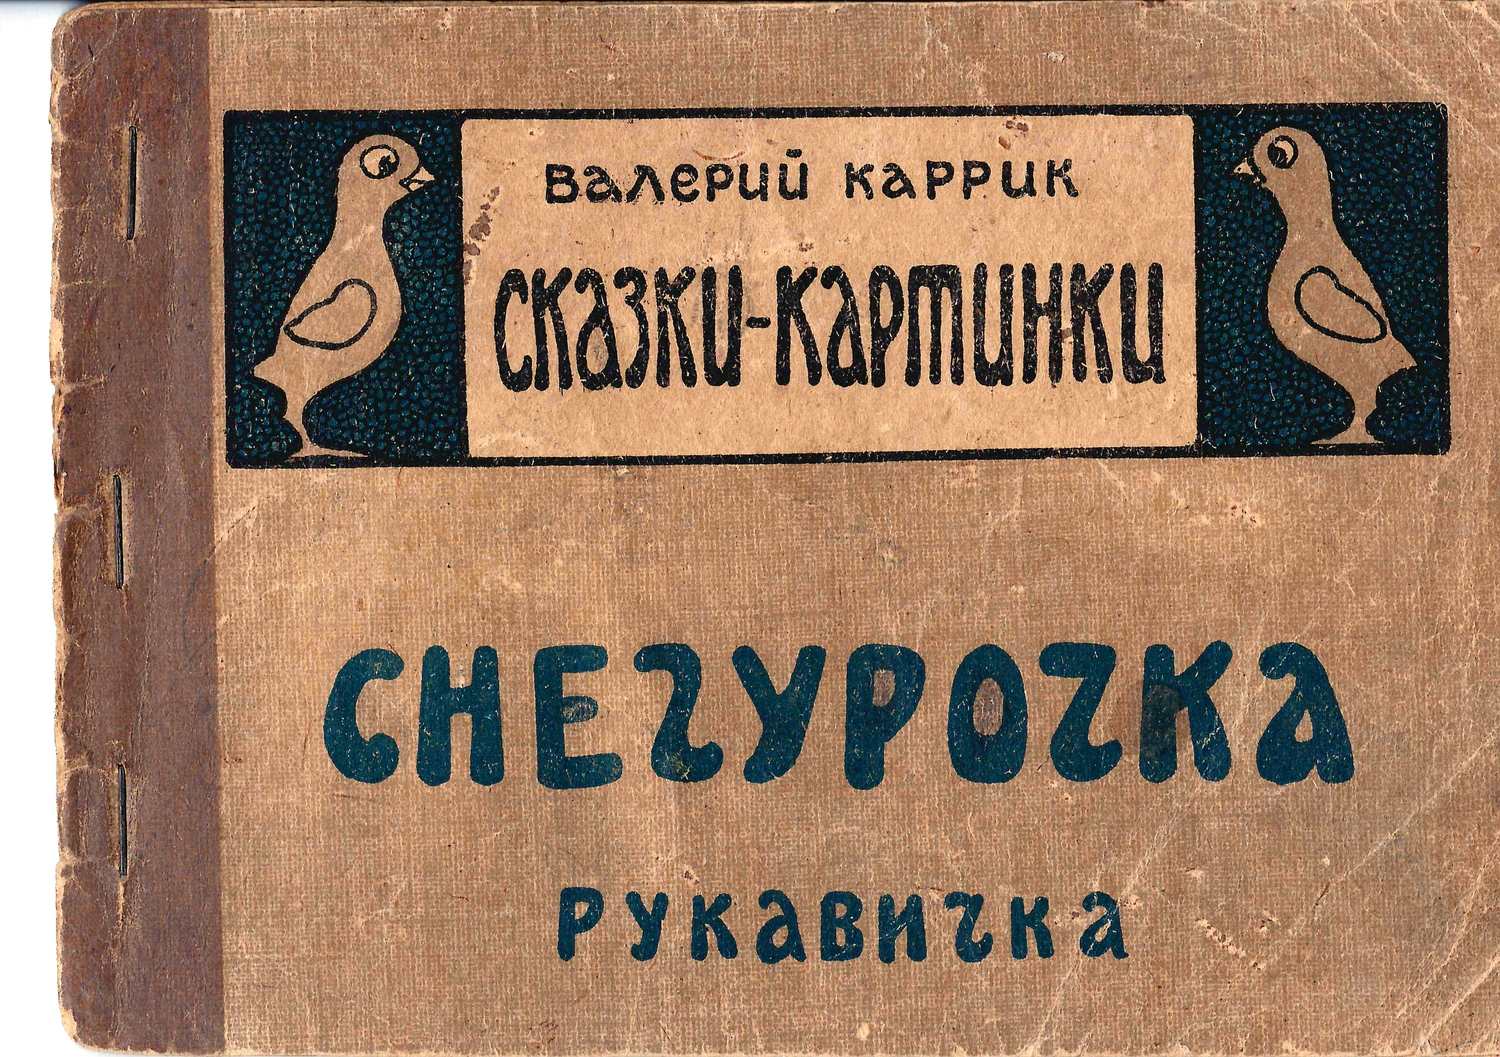 Каррик В.В. Сказки-картинки. Снегурочка. Рукавичка (М., 1922).